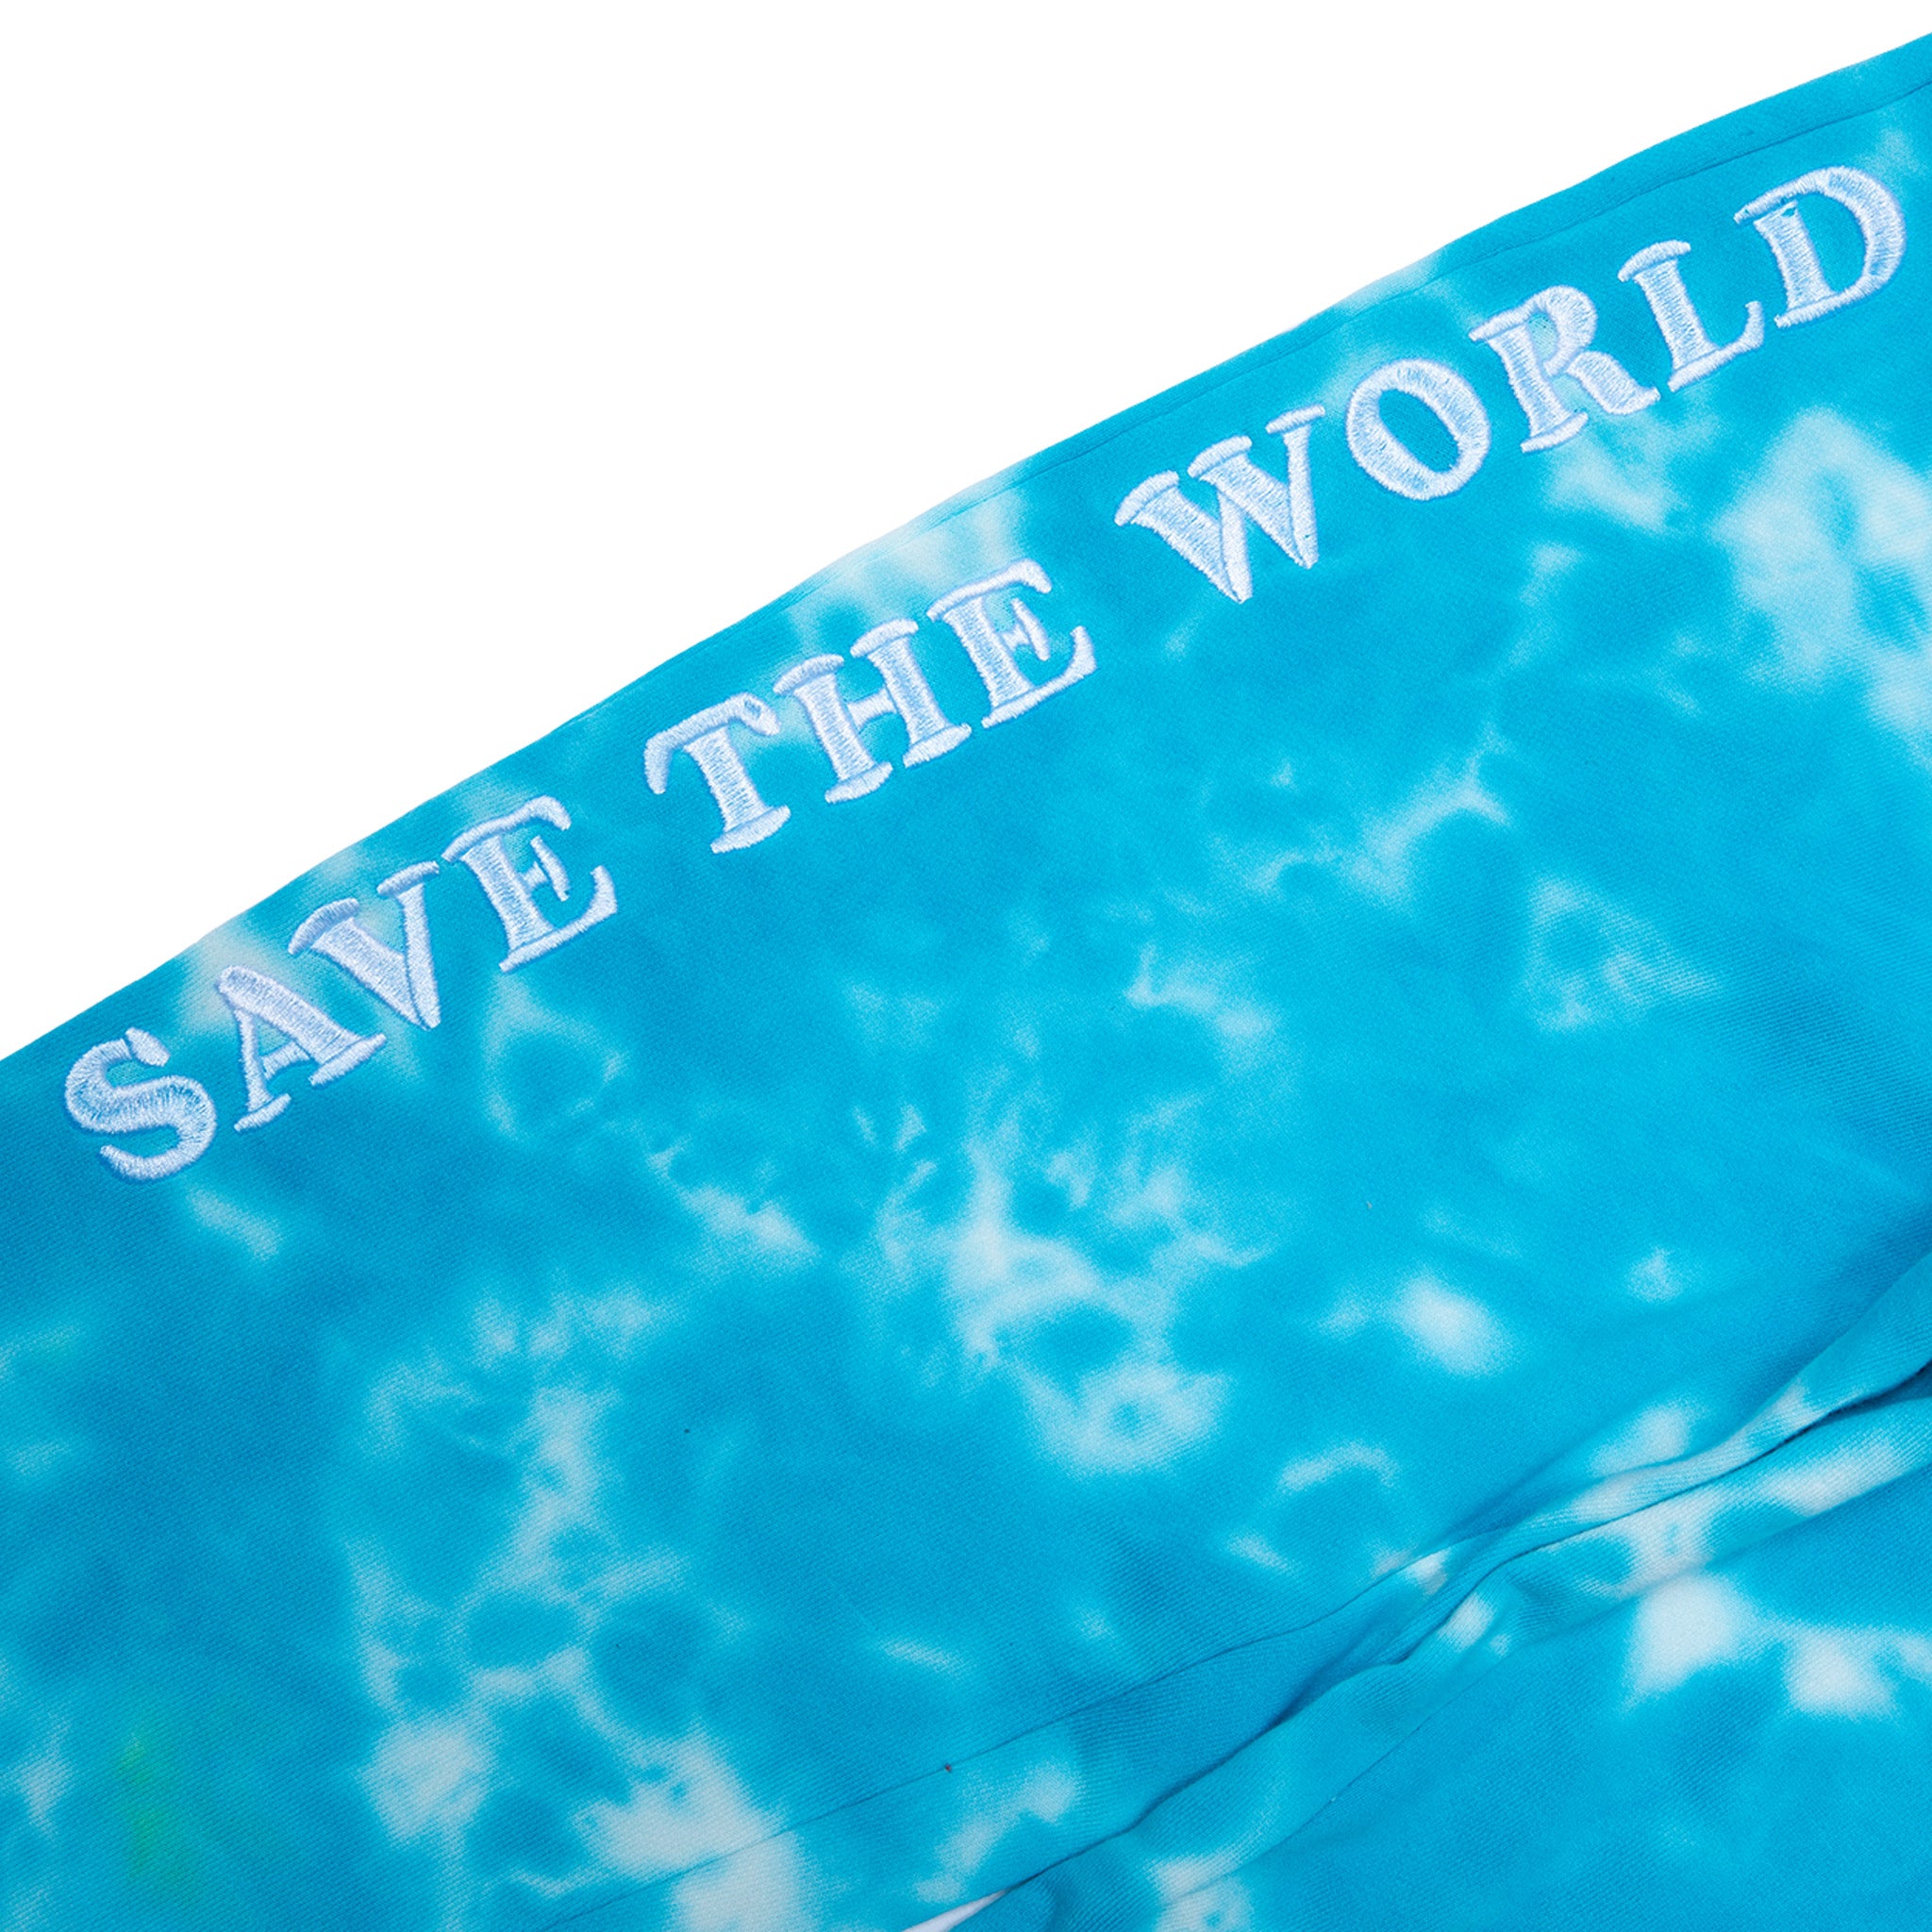 Save the World Embroidered Sweatpants (Aqua/Green Tie Dye)